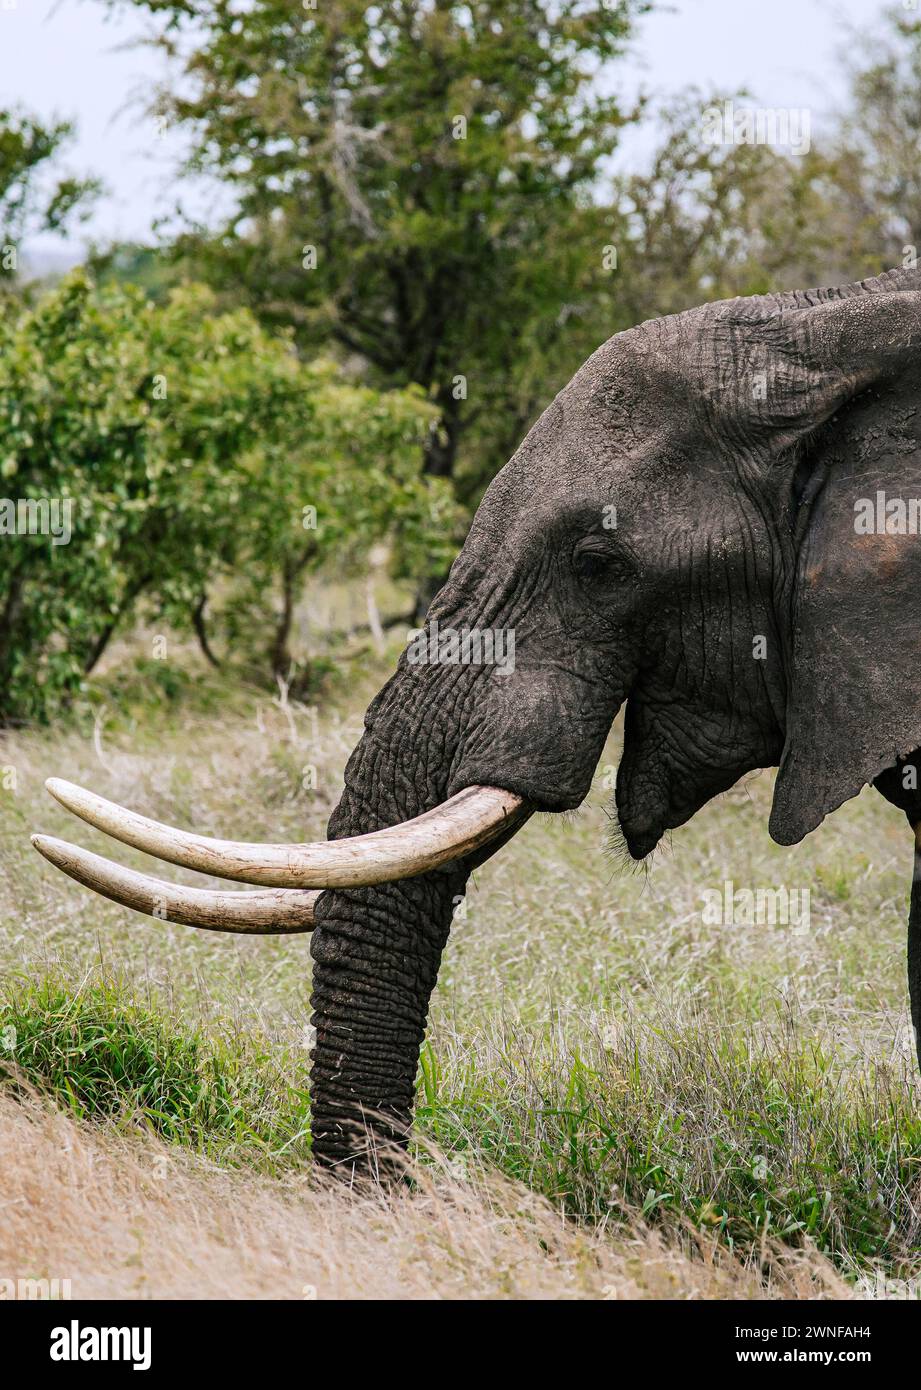 Cabeza elefante africano con la boca abierta, retrato de cerca, vista lateral. Safari en la sabana, Sudáfrica, Parque Nacional Kruger. Animales hábitat natural, w Foto de stock